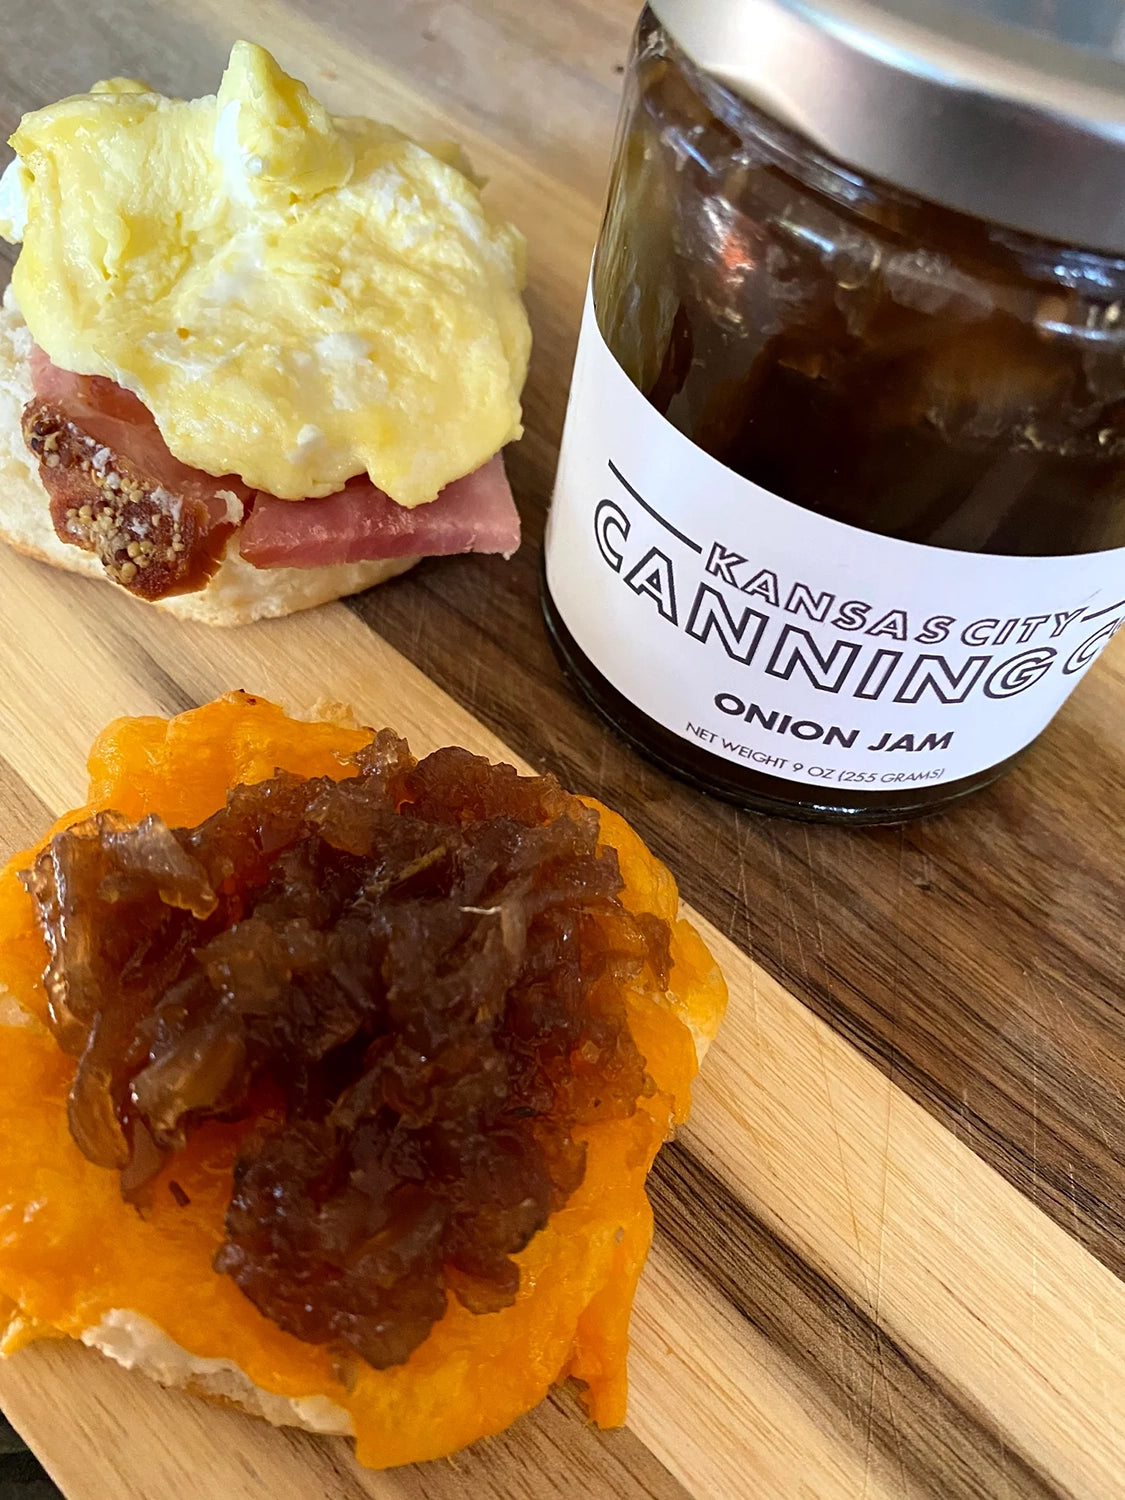 Kansas City Canning Co Onion Jam Condiments & Sauces 12043290